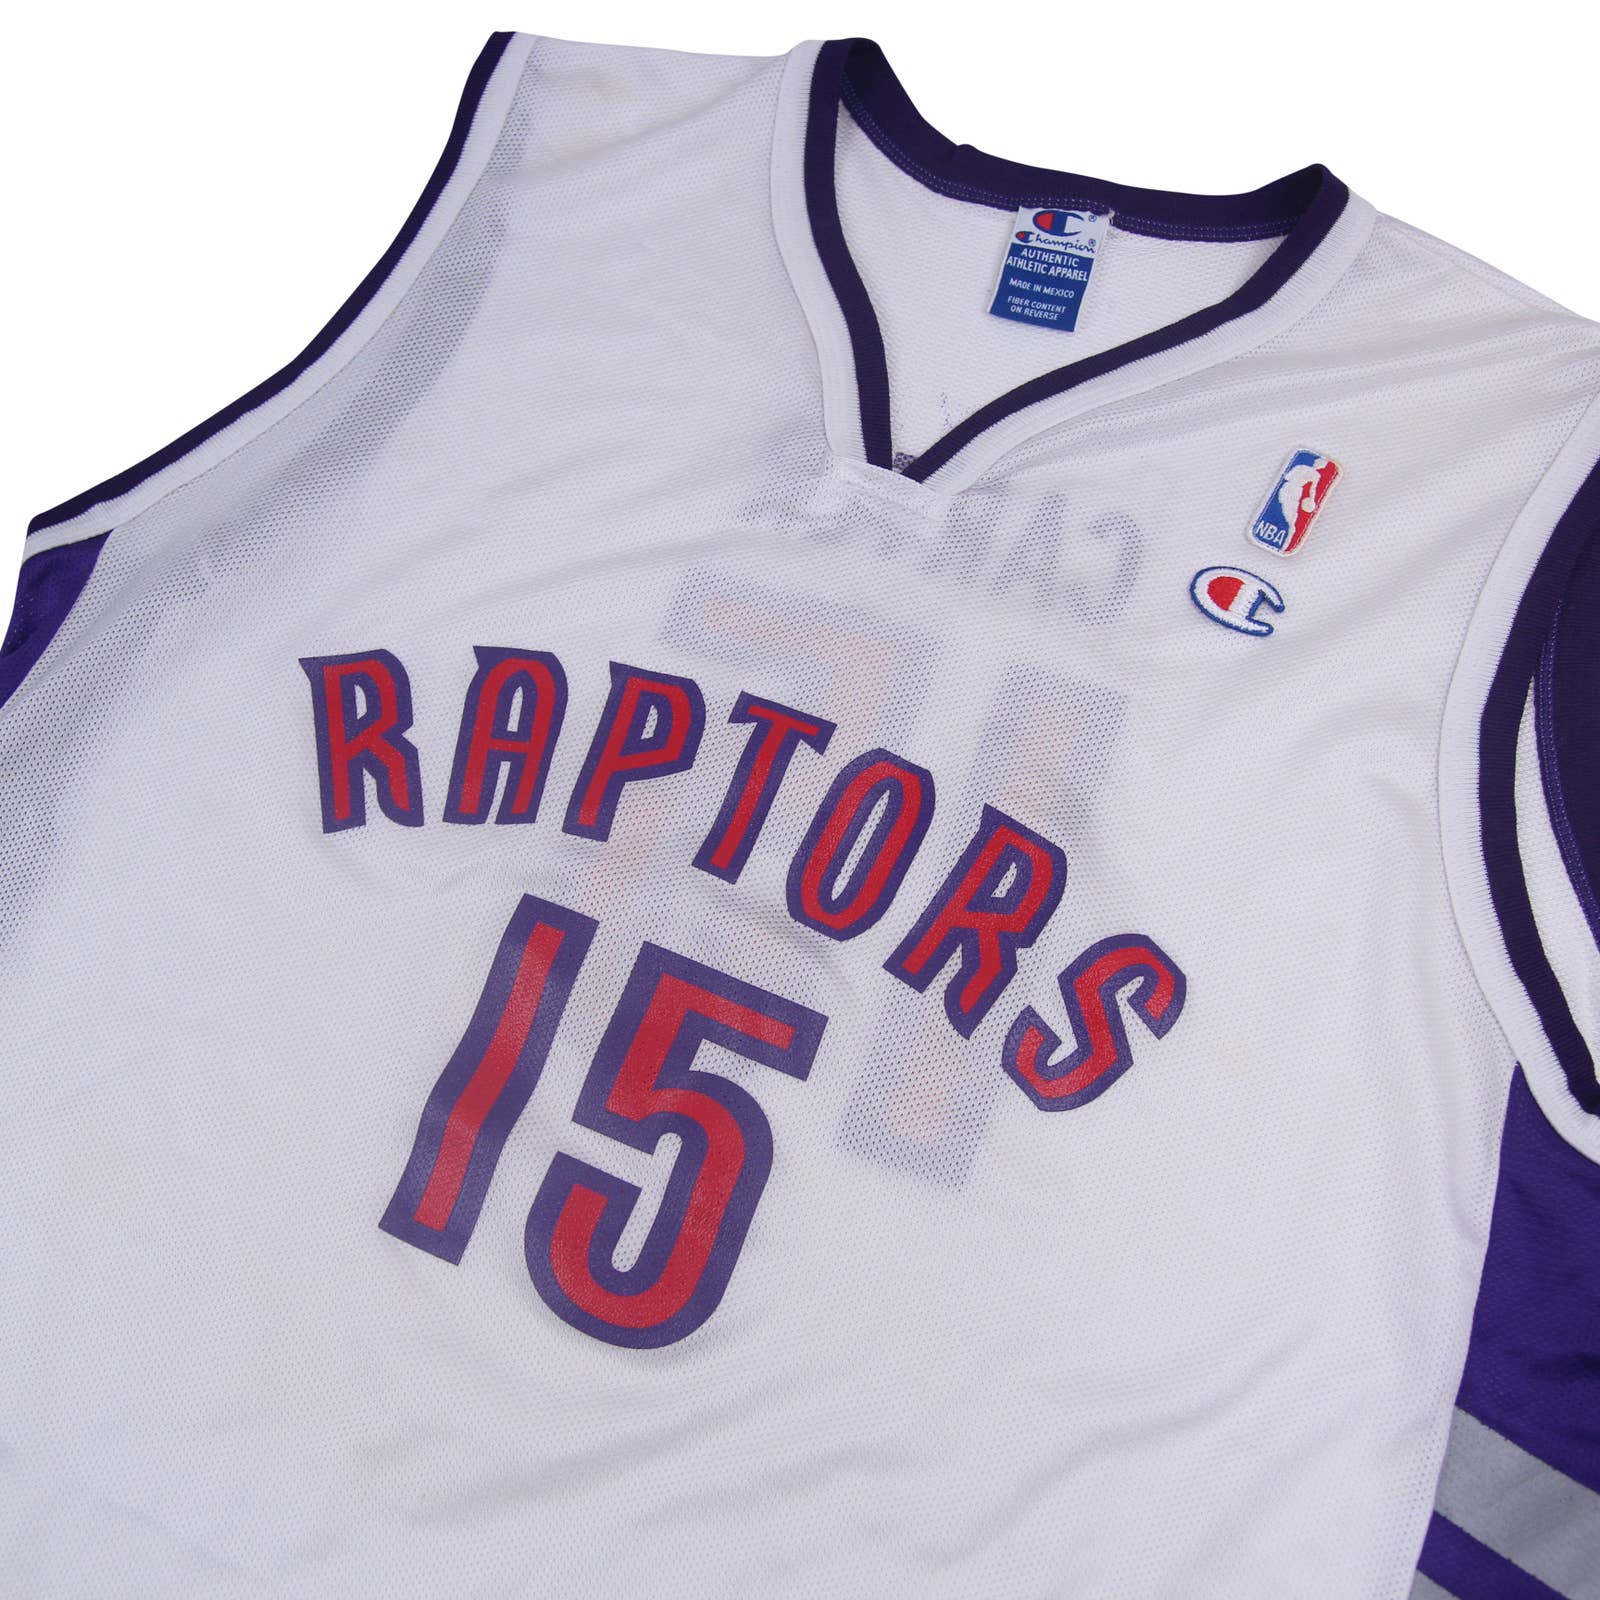 Vince Carter Toronto Raptors NBA Throwback Old School Jersey